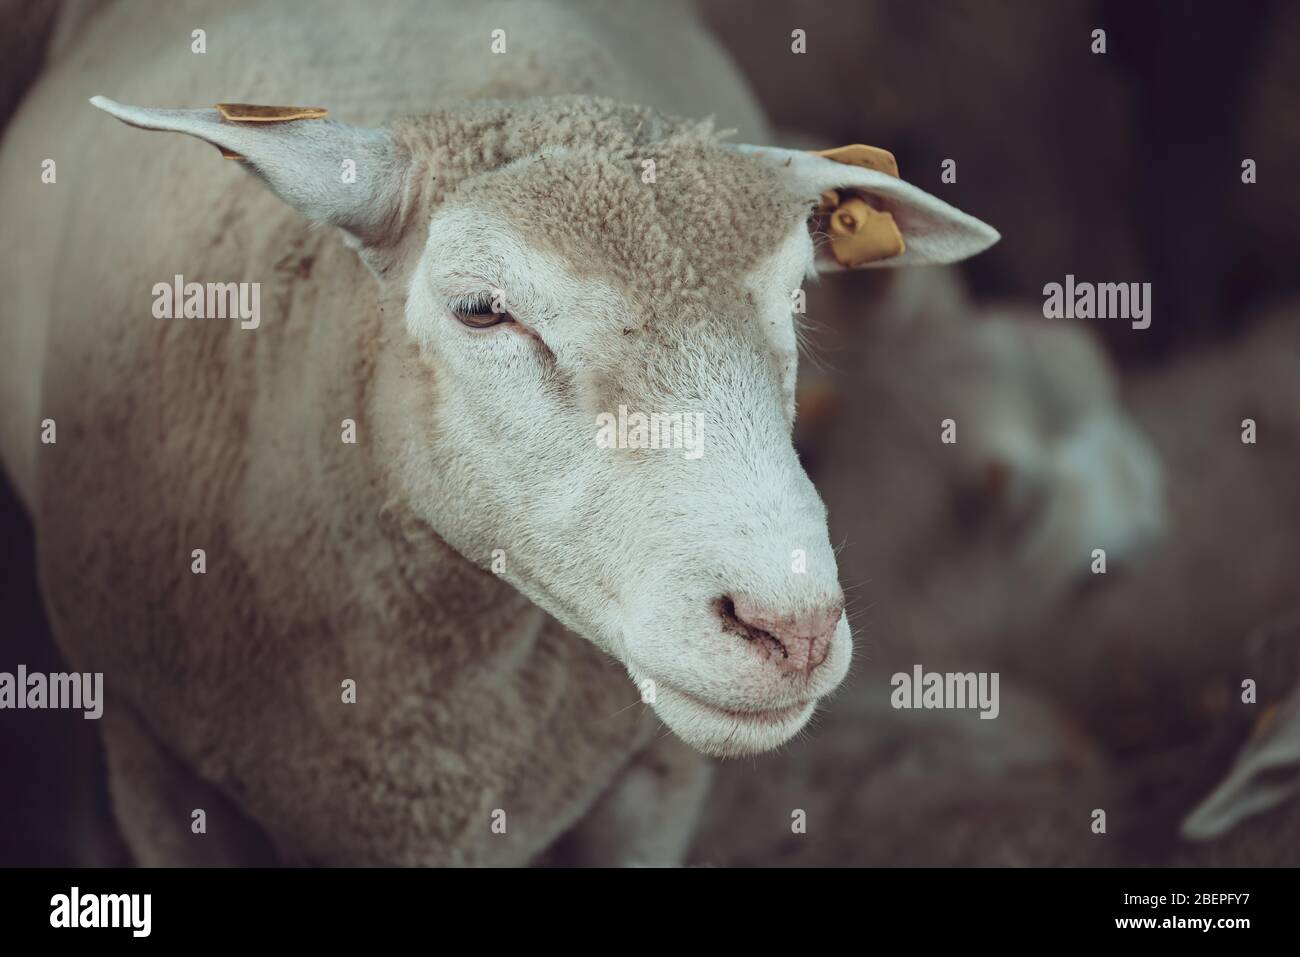 Ile de France sheep flock in pen on livestock farm, domestic animals husbandry concept Stock Photo